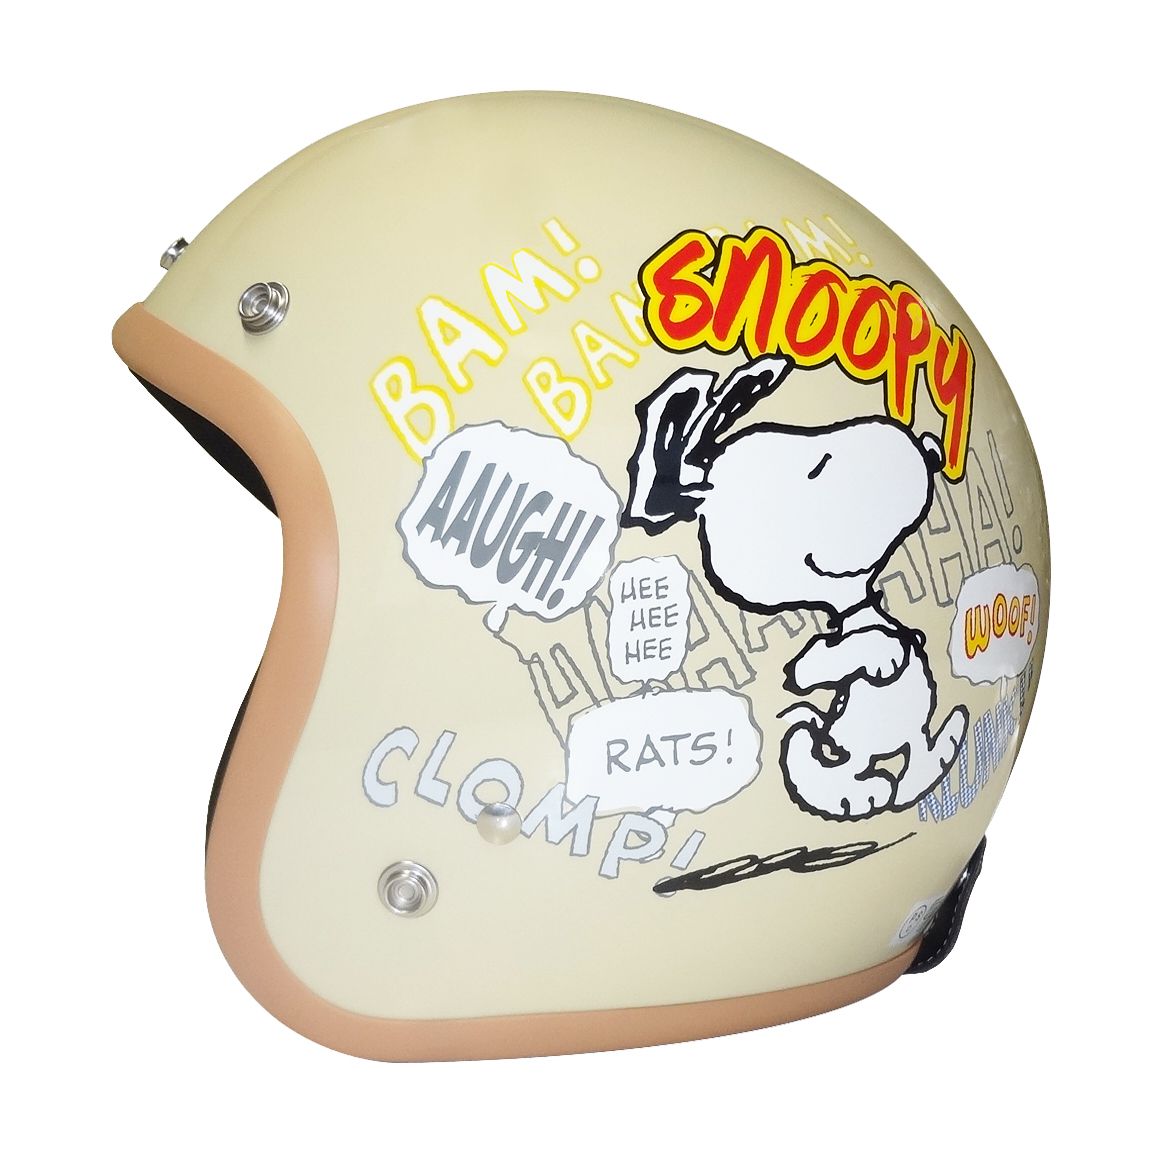 Webike Reit レイト アークス Snoopy スヌーピー ジェットヘルメット Snj03 ジェットヘルメット 通販